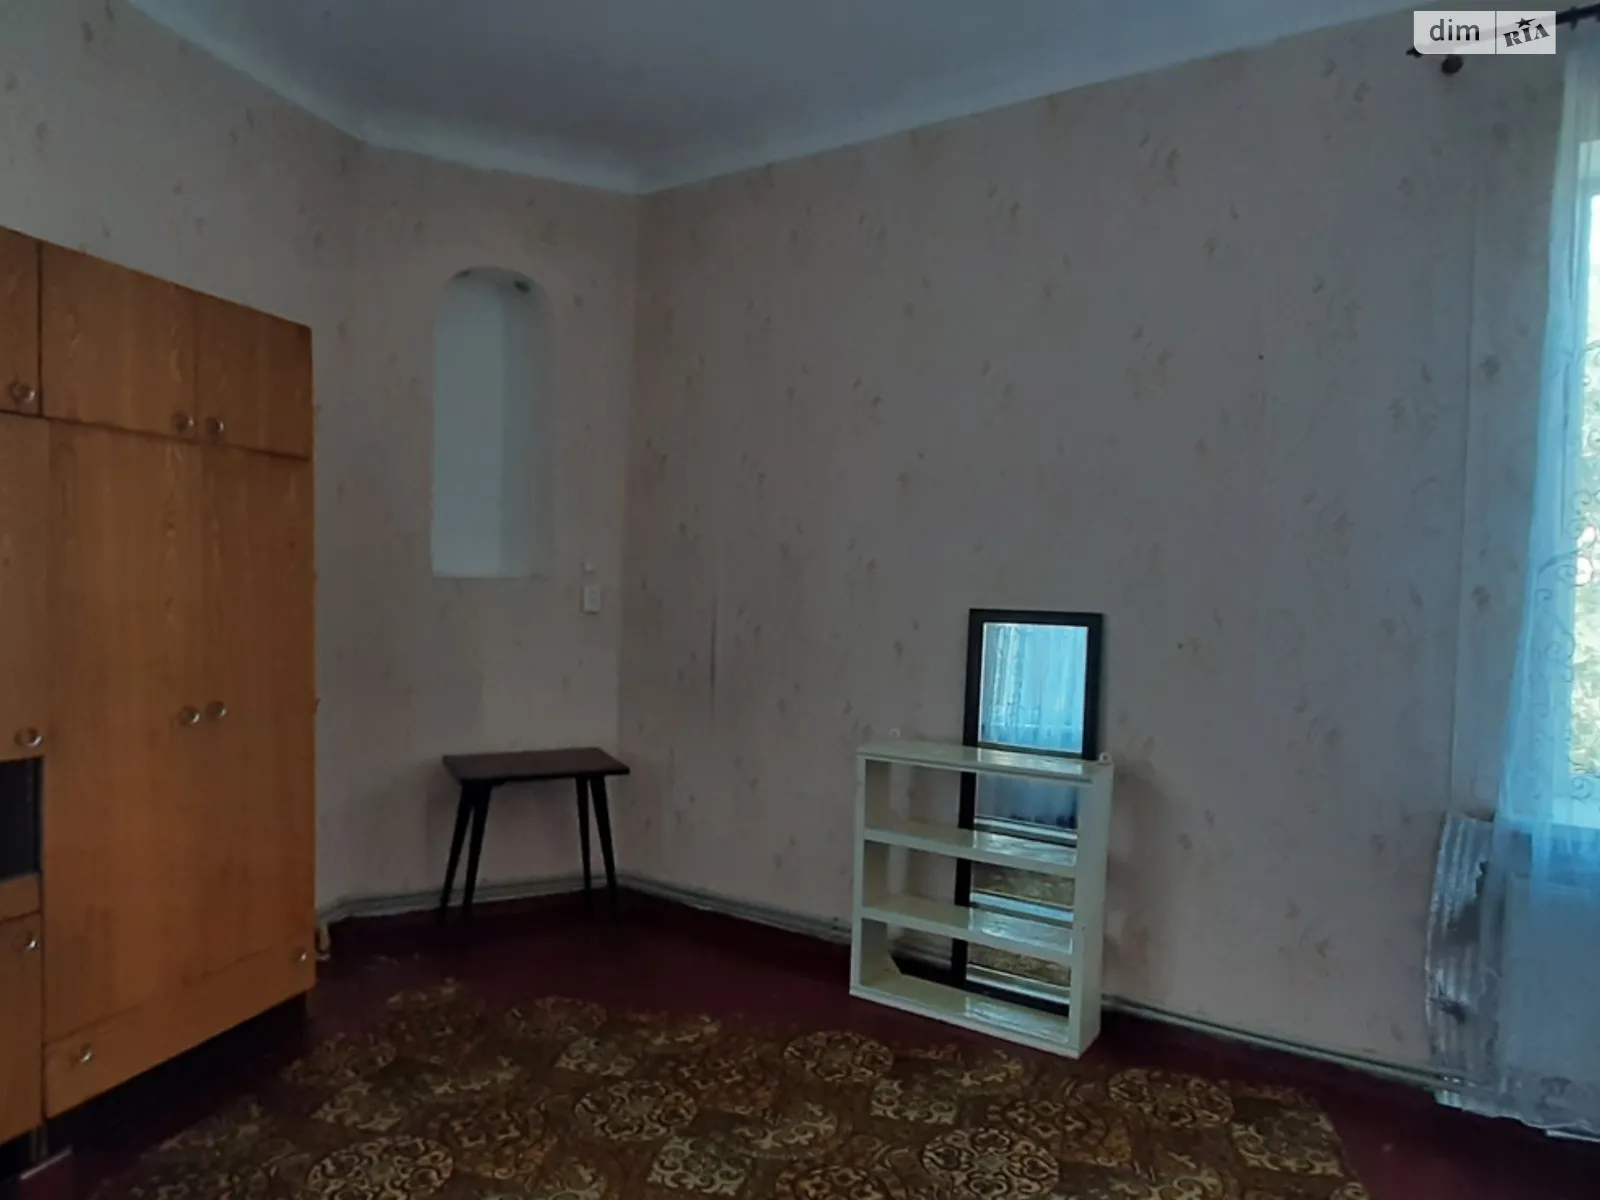 Сдается в аренду комната 35 кв. м в Харькове - фото 2